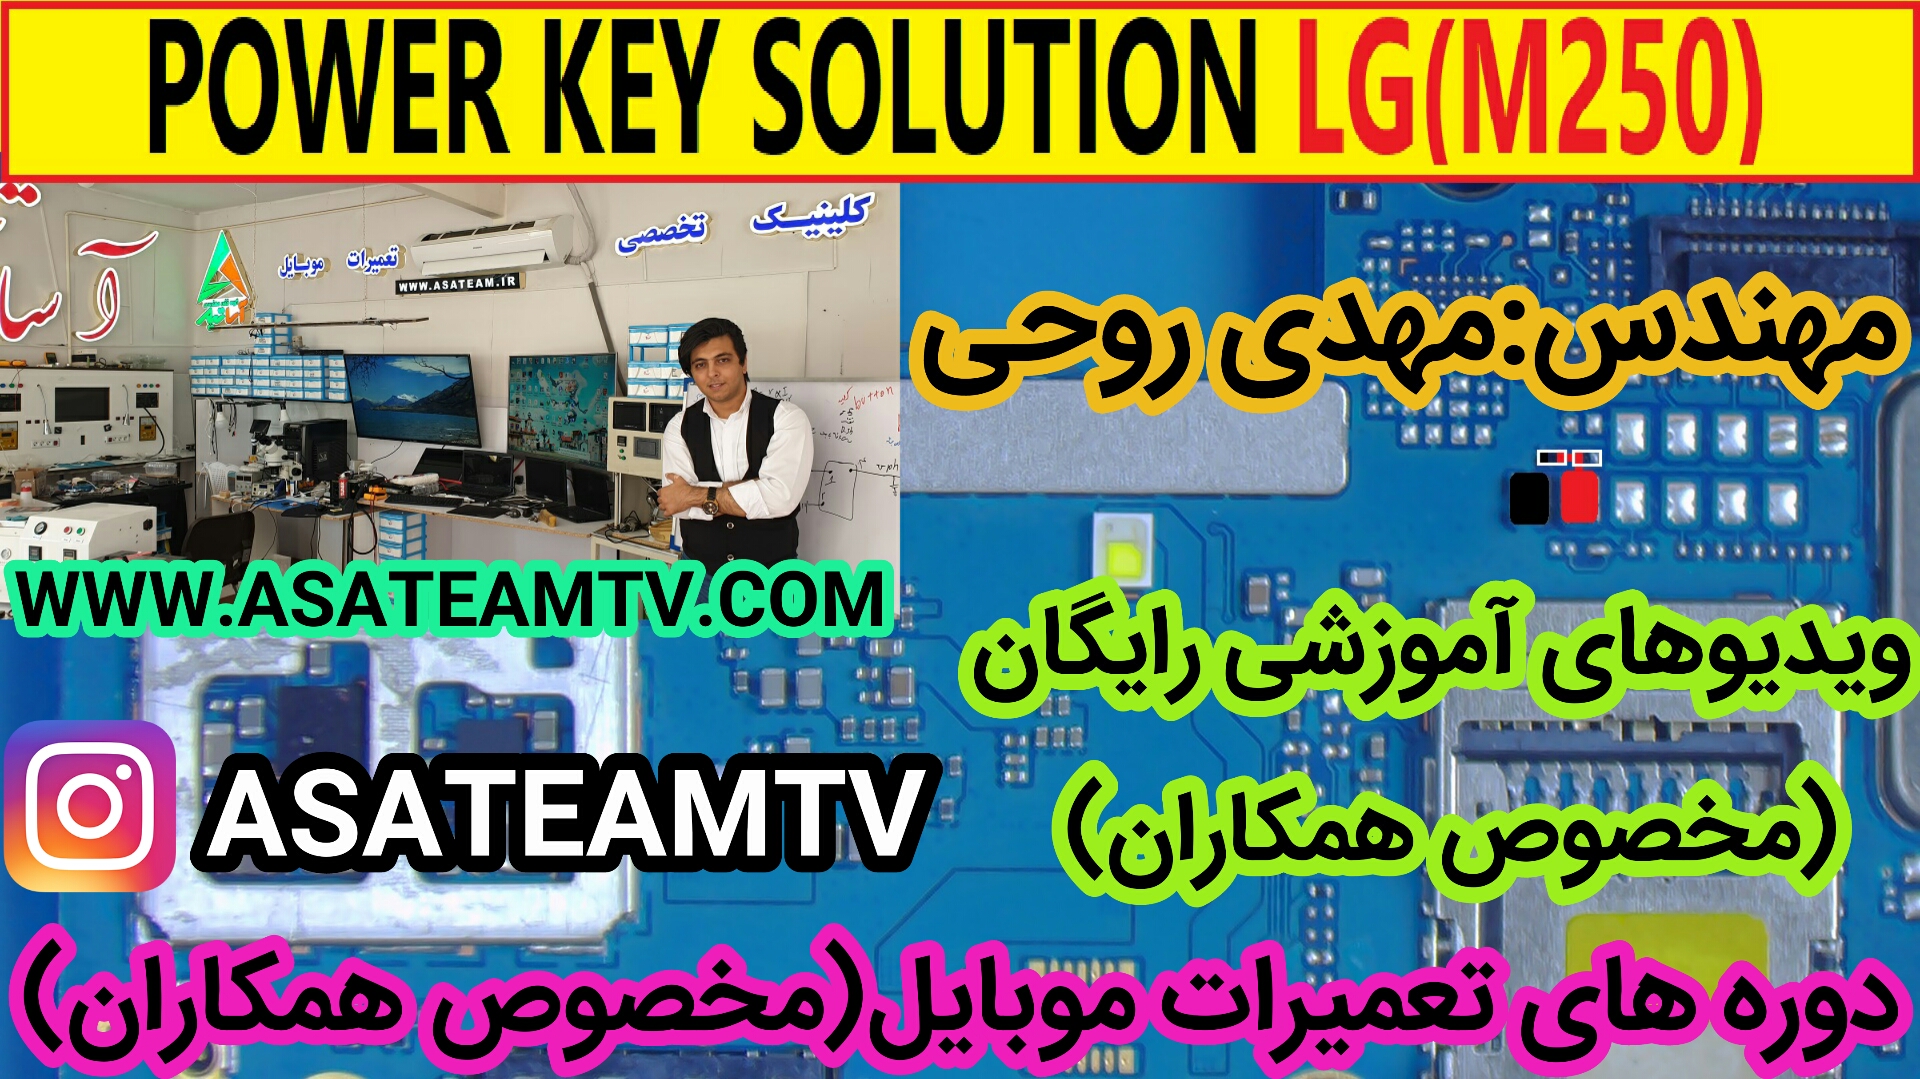 solution power key m250